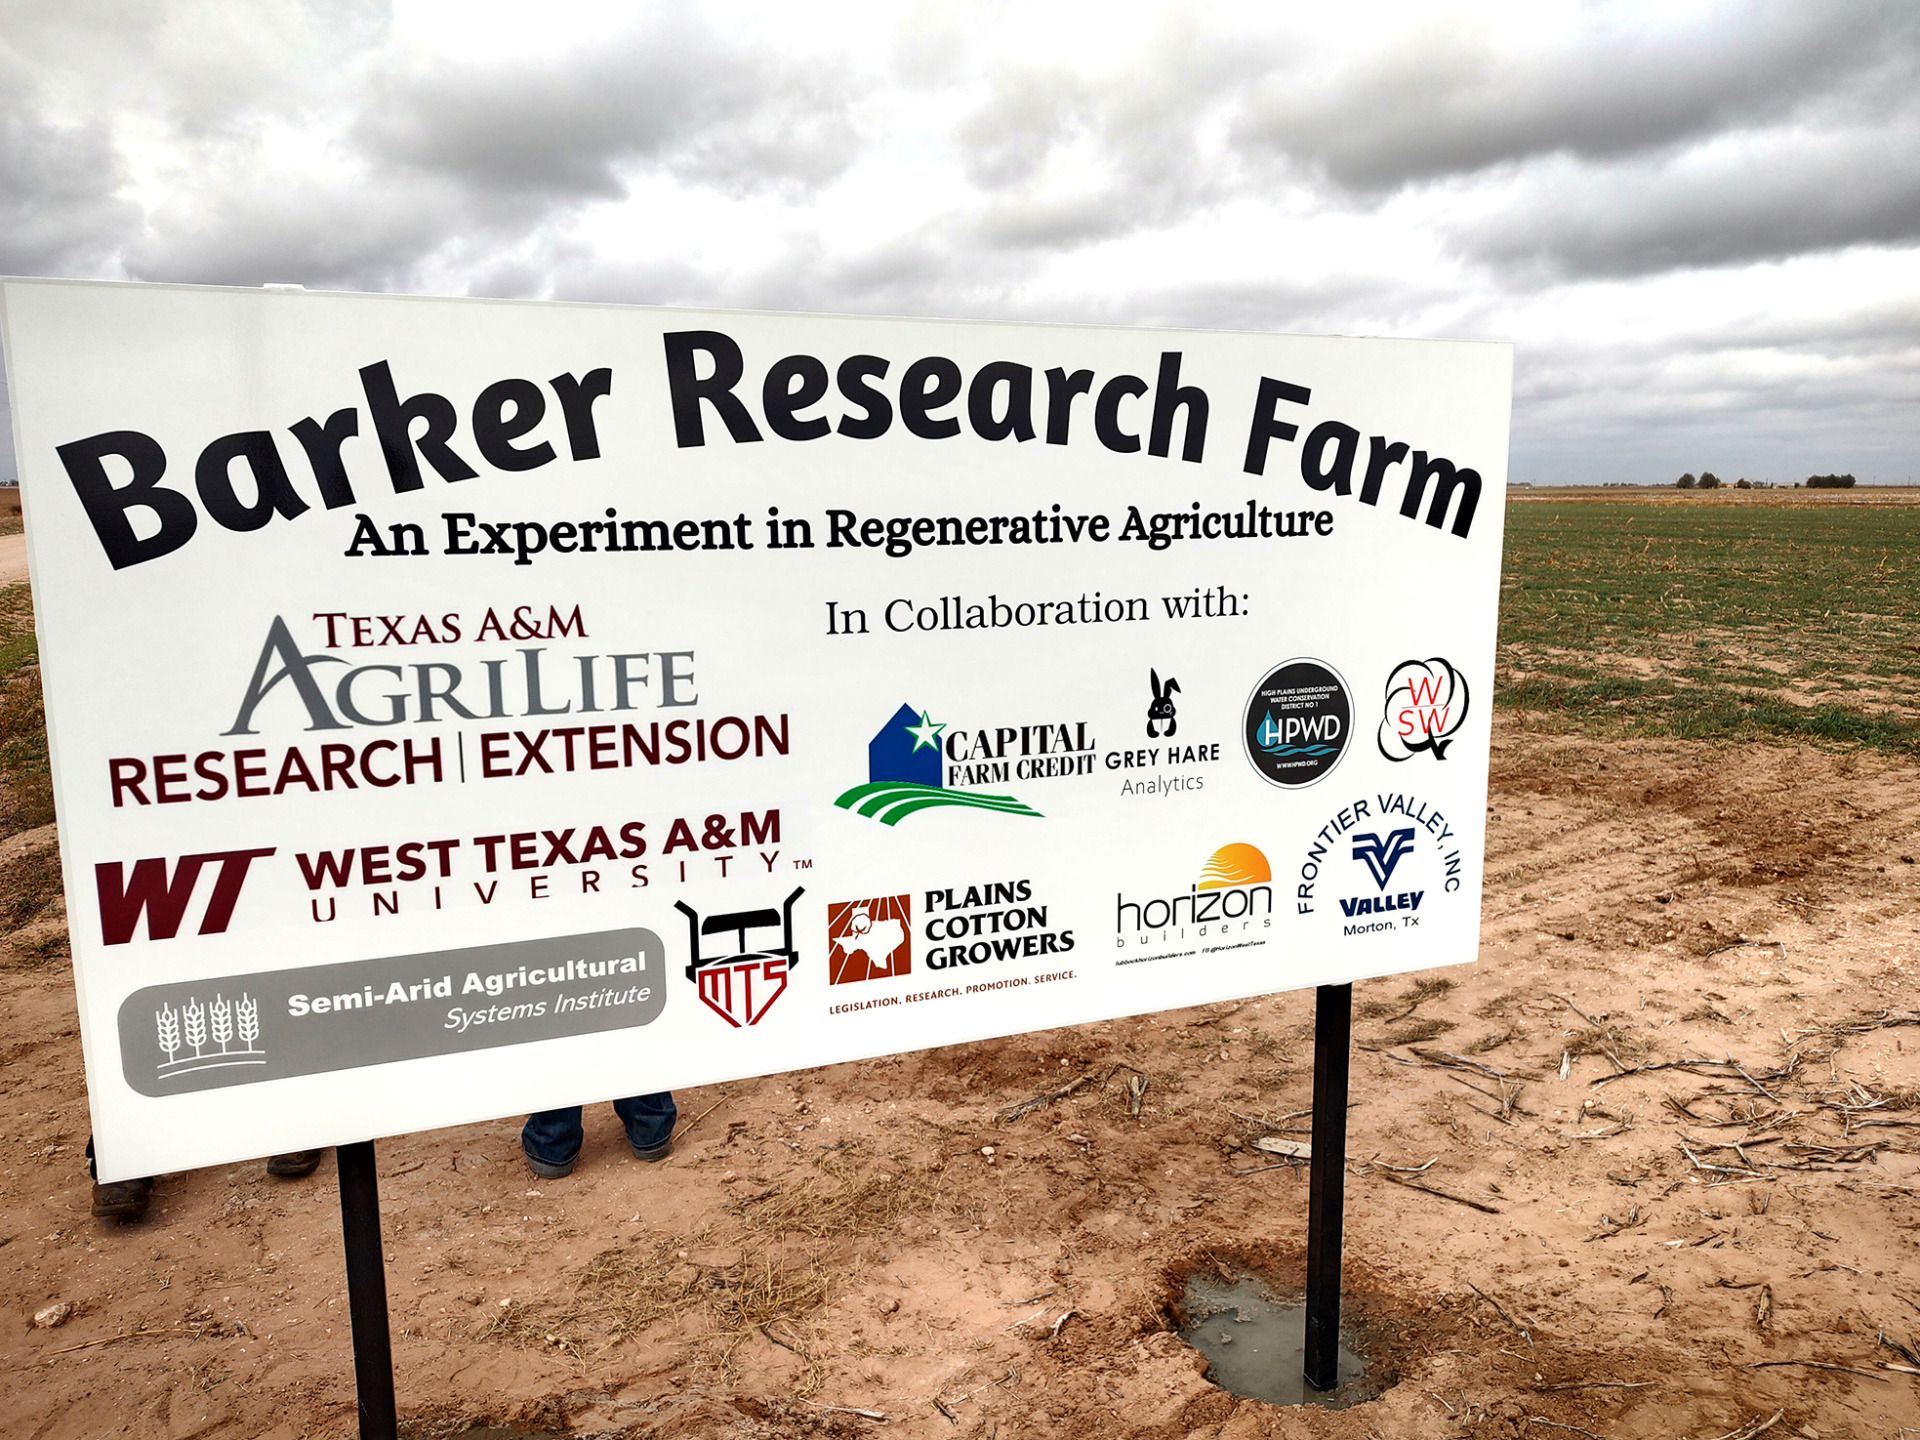 Dolle Barker farm offers South Plains regenerative cropland research, education